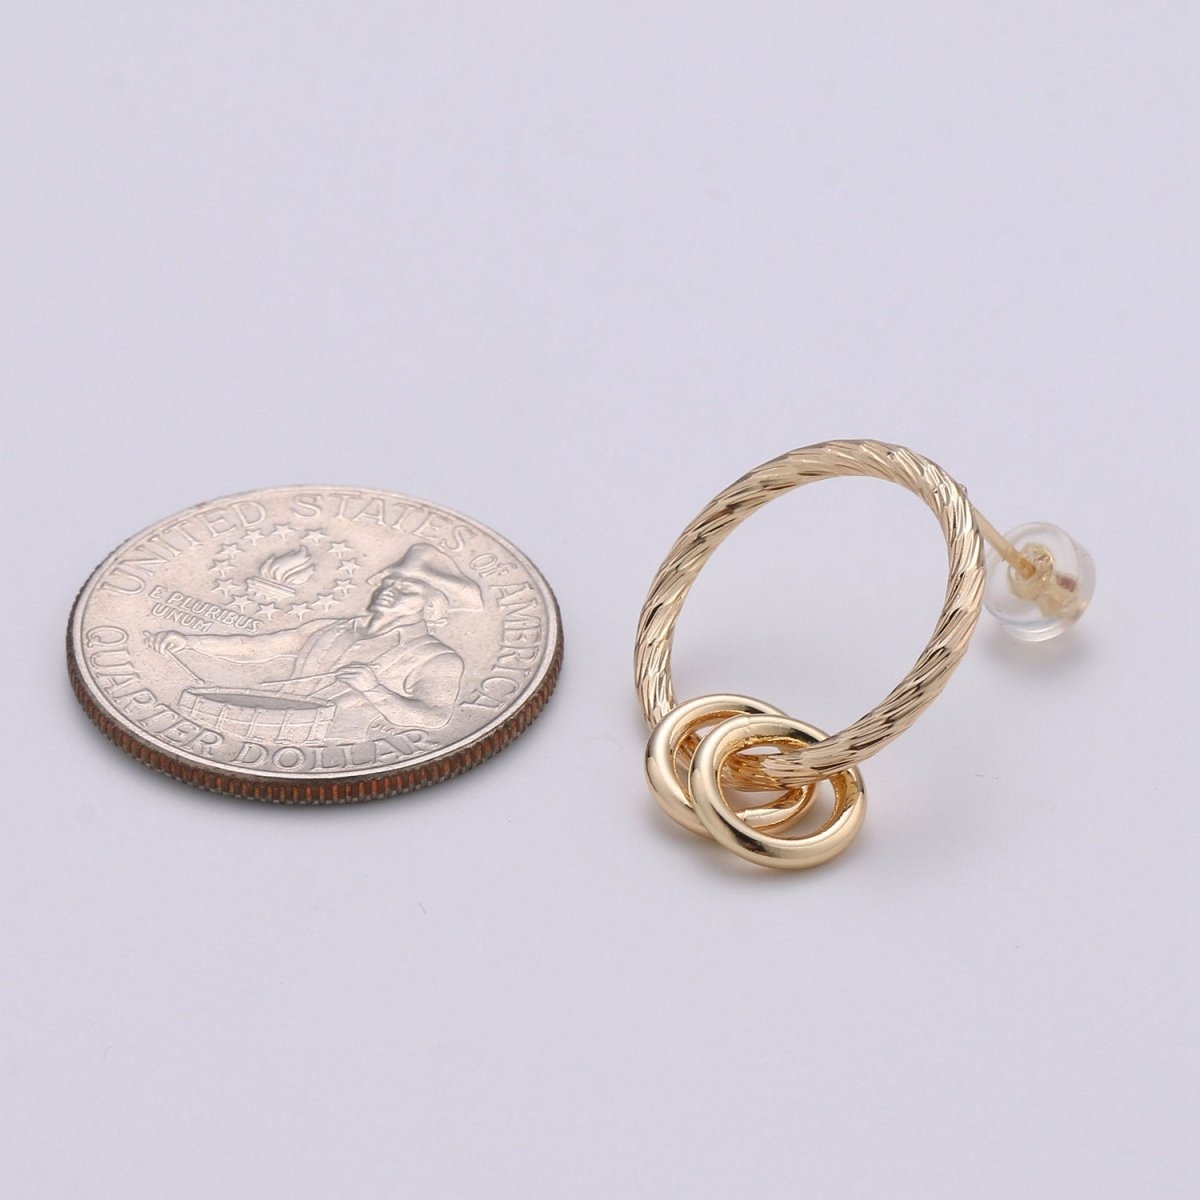 Dainty Gold Hoop Earrings, Gold Disk Earrings, Tiny Hoops with Coin Charm, Geometric Earrings, Gold Huggie Earrings, Minimalist Hoops, Gift Q-244 - DLUXCA